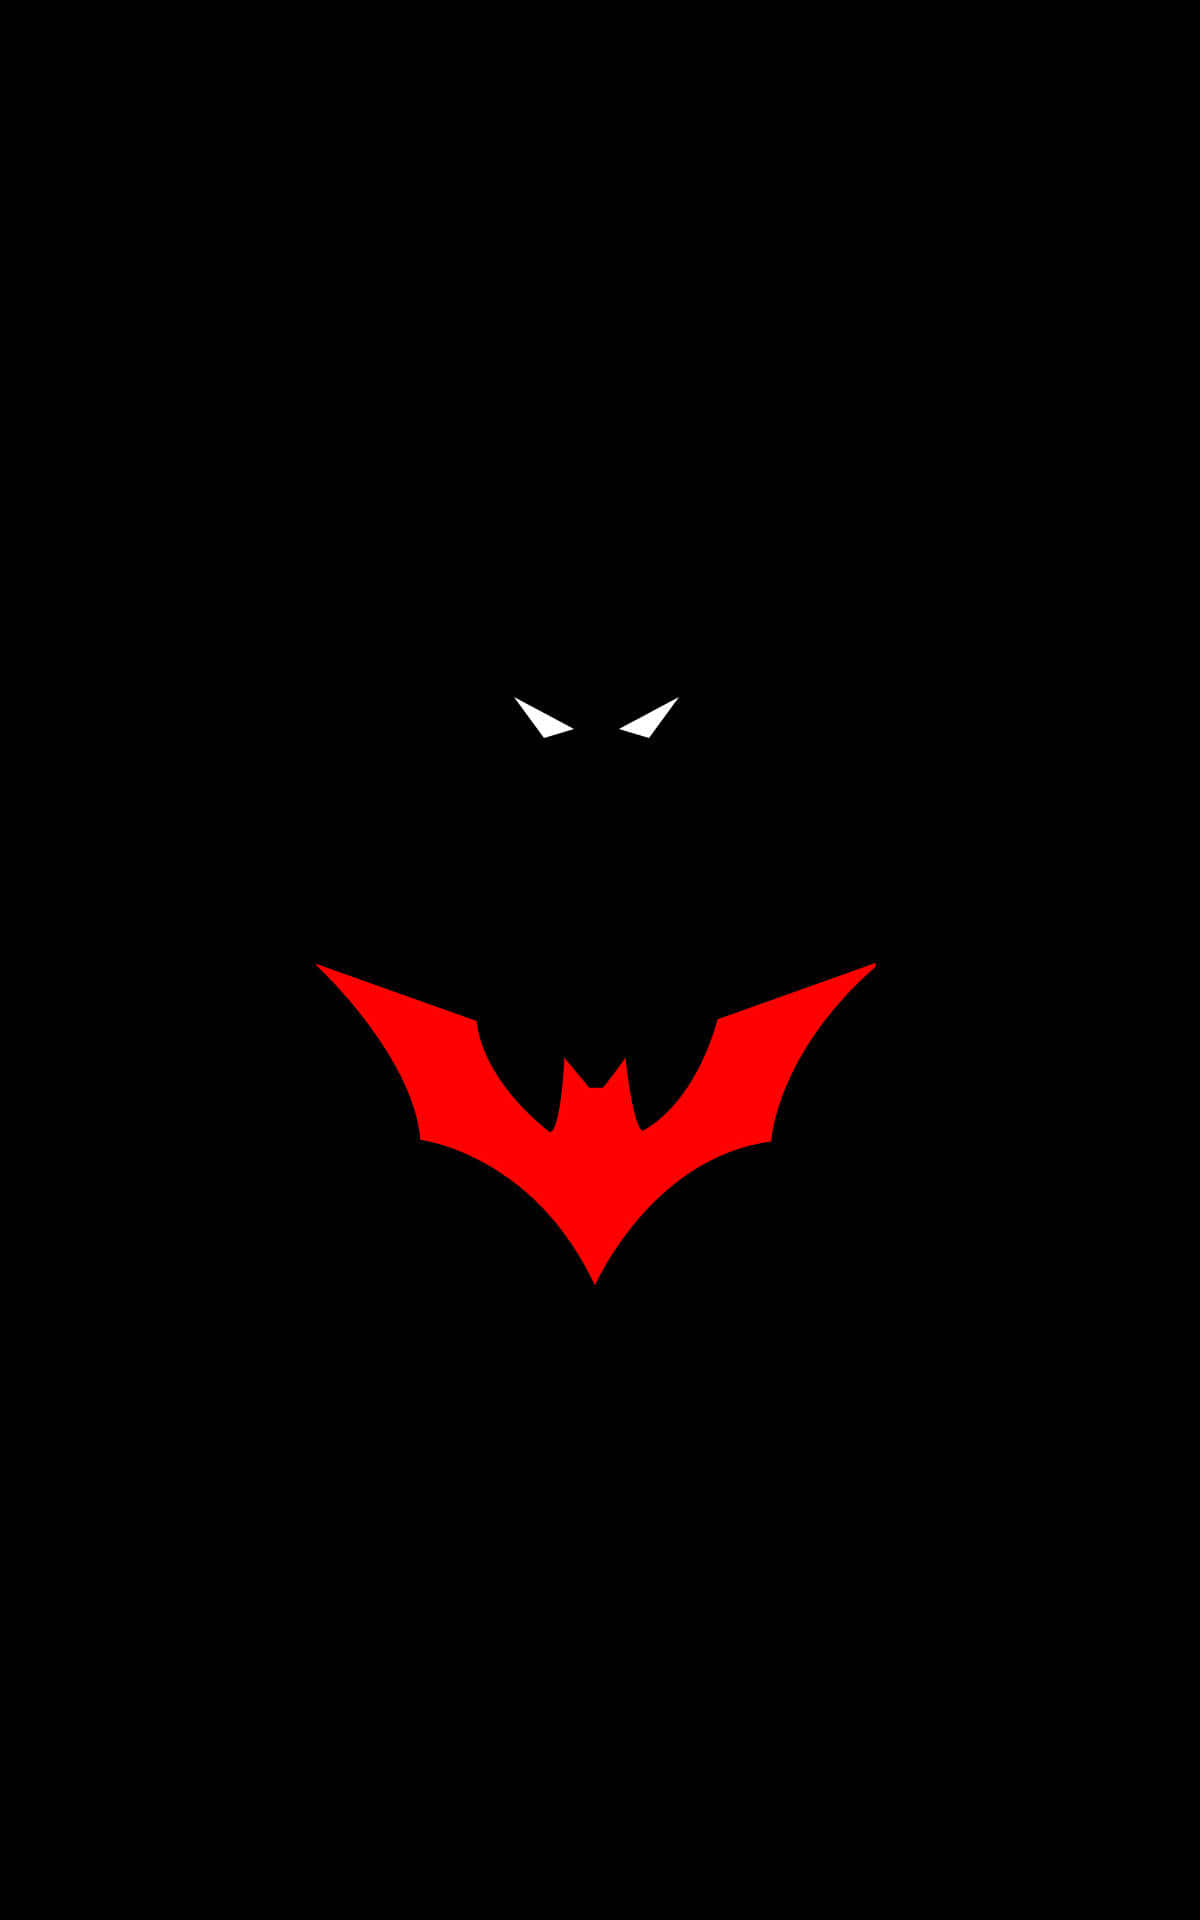 Redand Black Batman Symboloni Phone Wallpaper